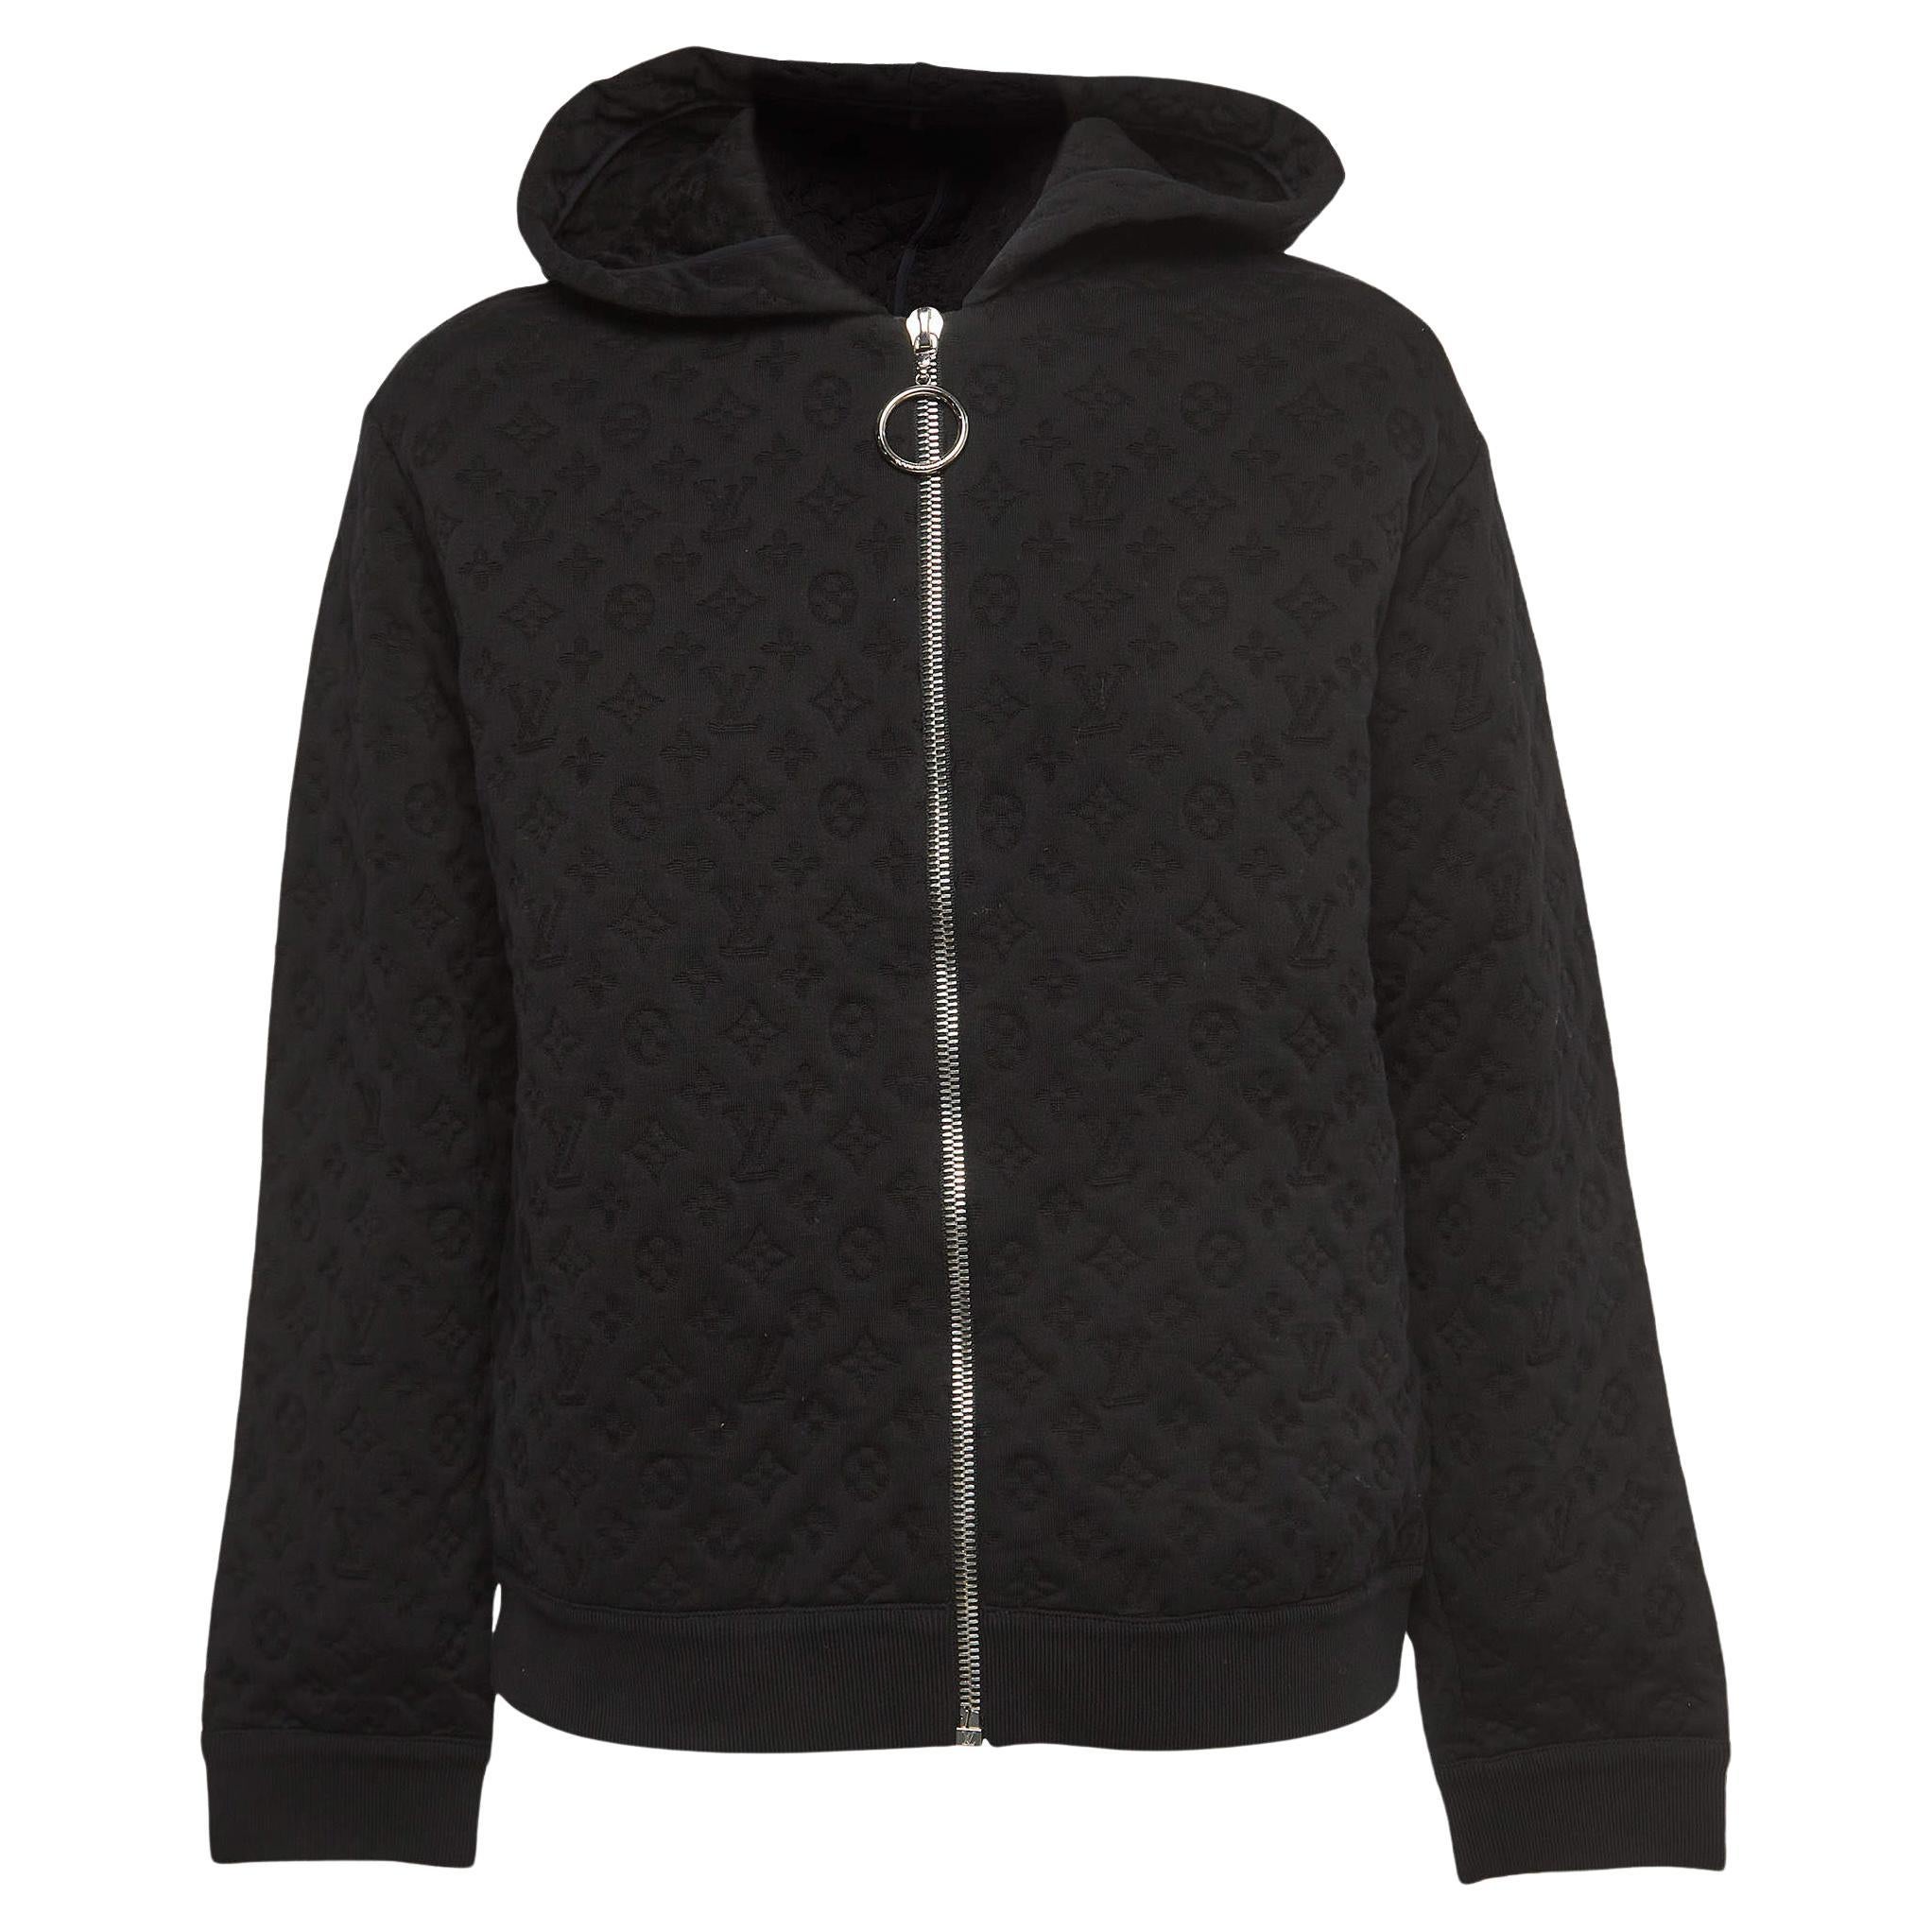 Louis Vuitton Black Embossed Monogram Cotton Knit Zip Front Hooded Jacket M